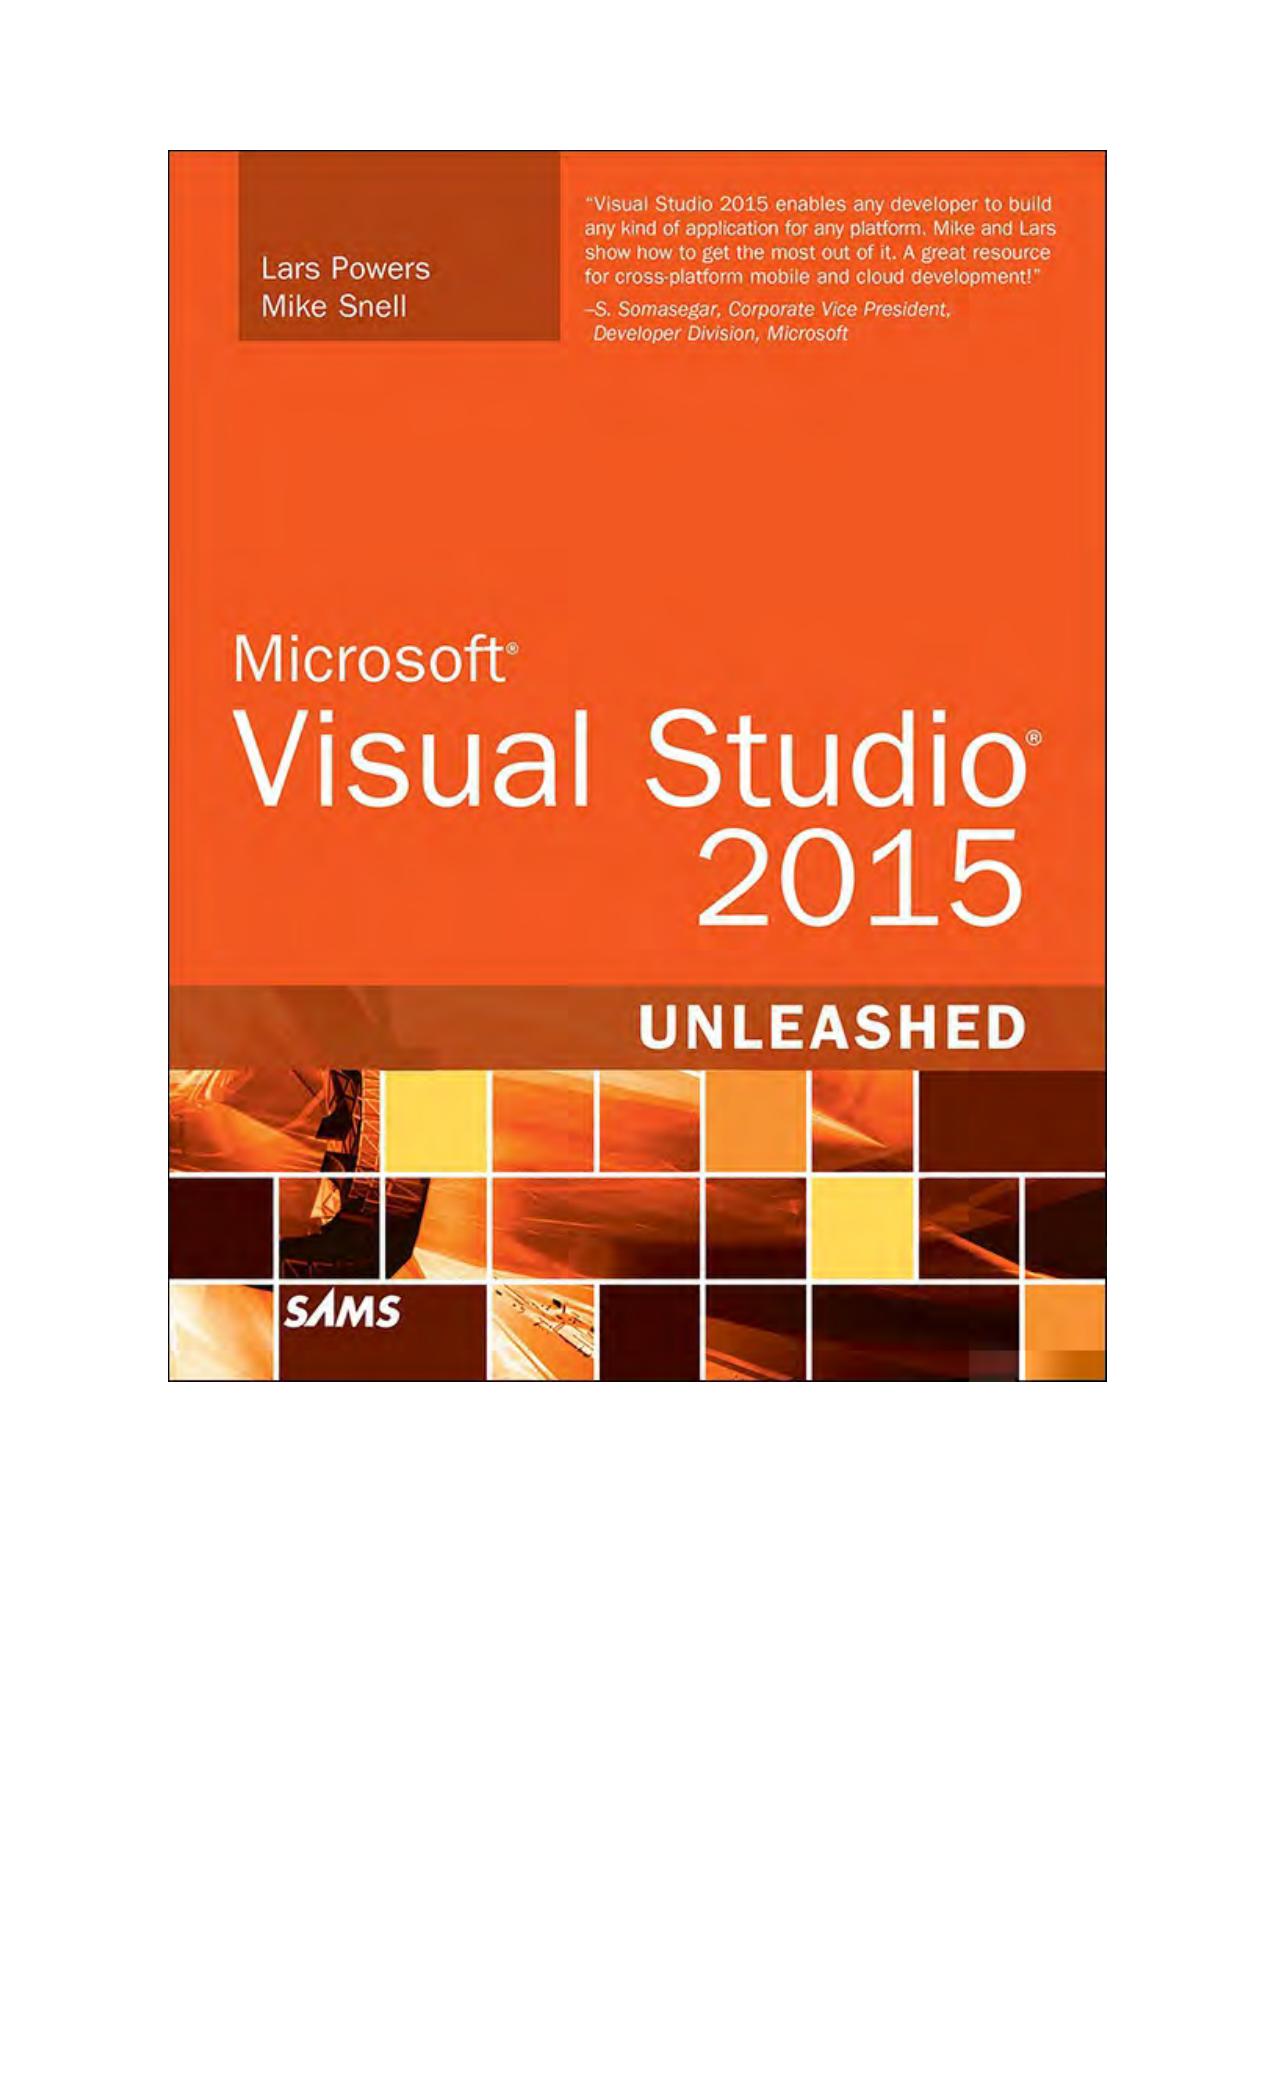 Microsoft Visual Studio 2015 Unleashed, Third Edition